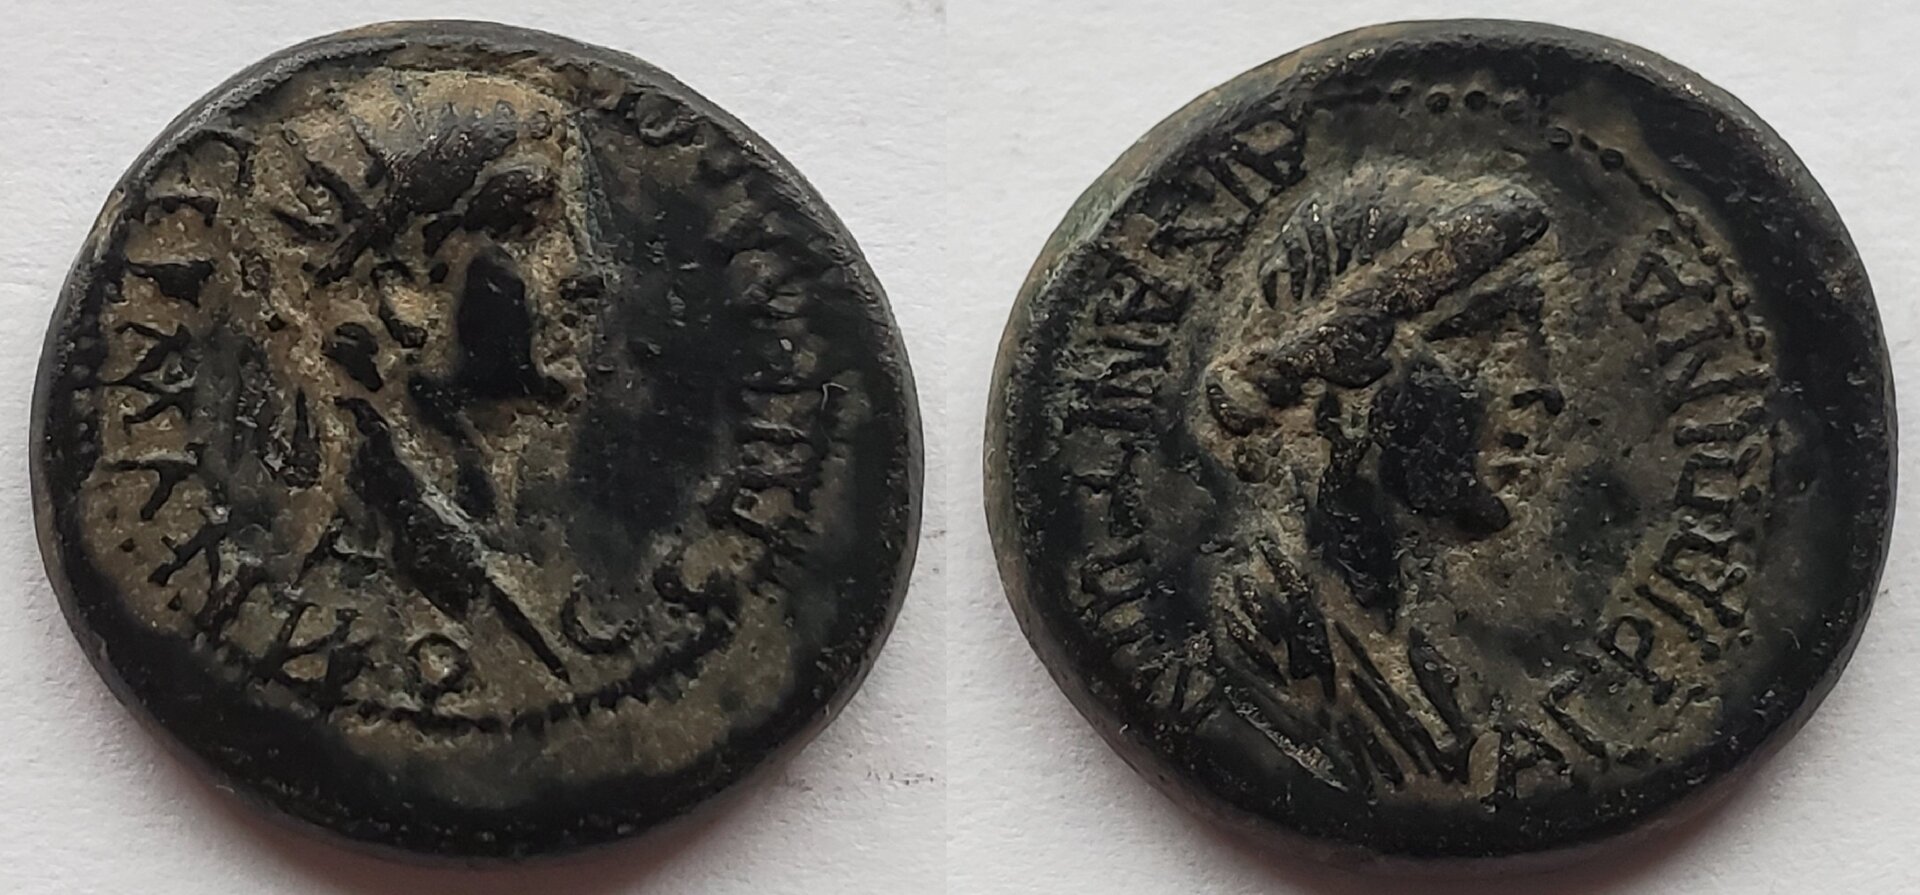 Germanicus and Agrippina aezanis phrygia posthumous.jpg